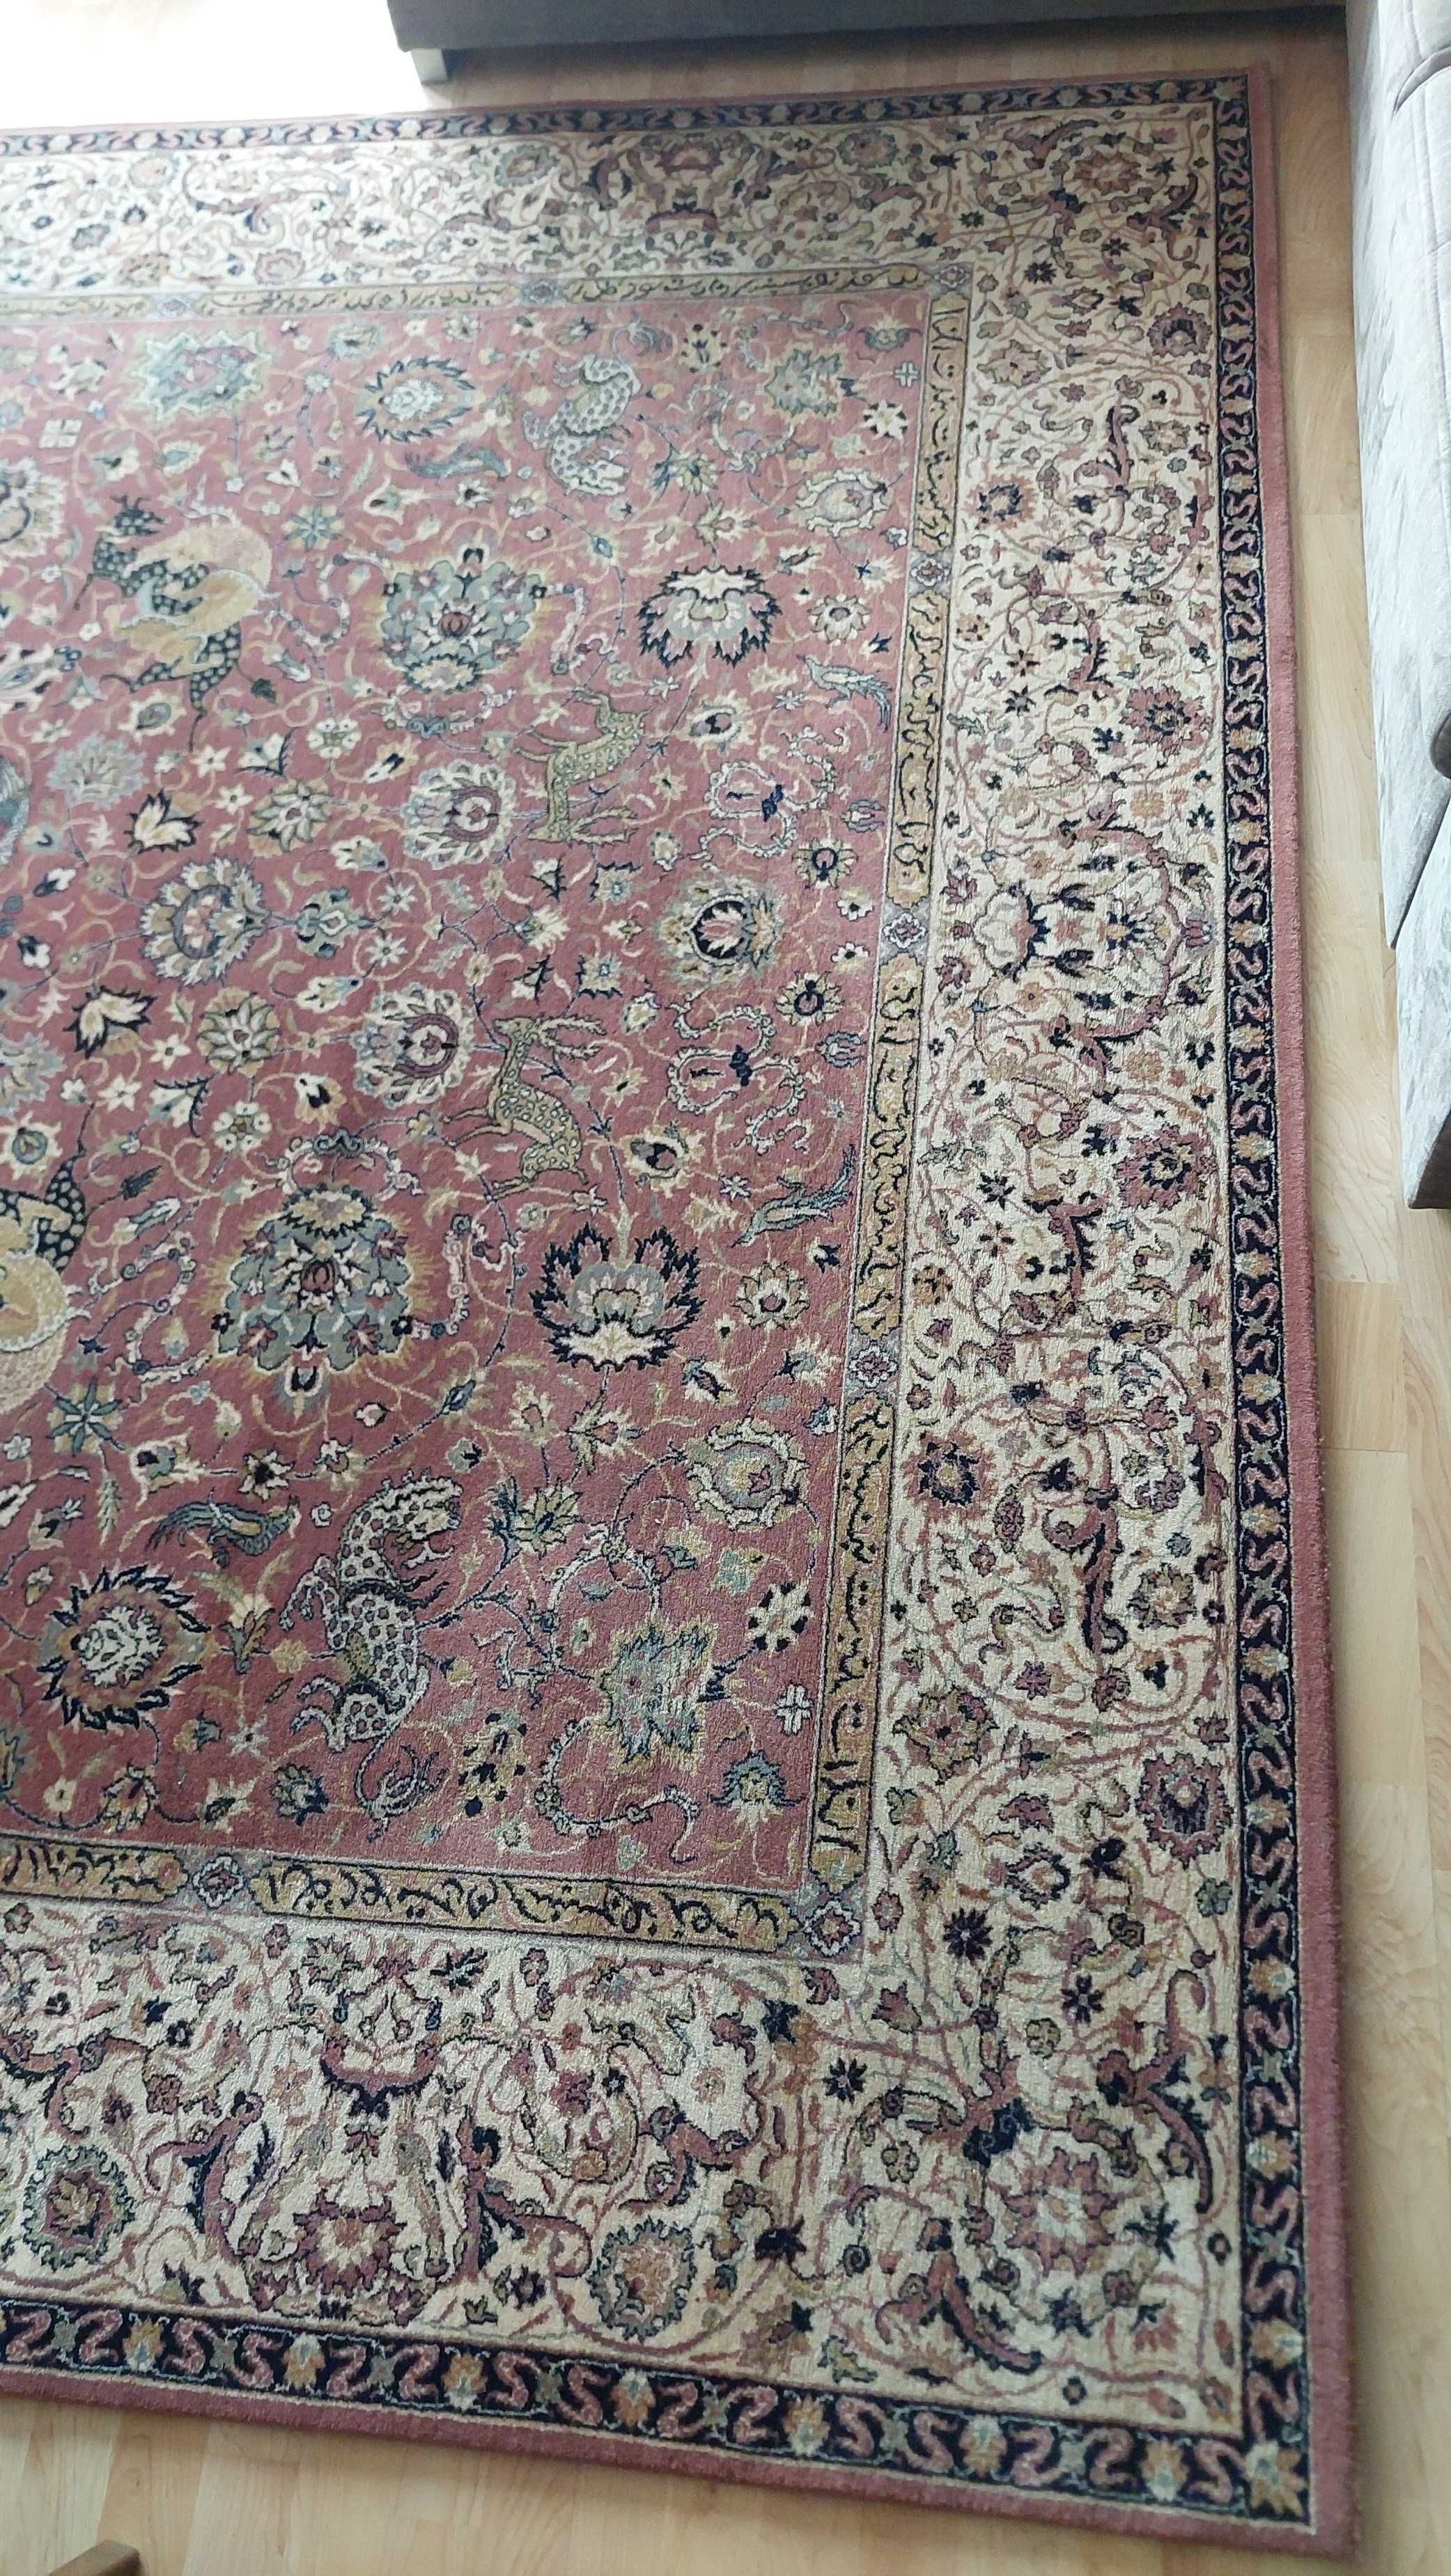 Piękny wełniany dywan QUEEN